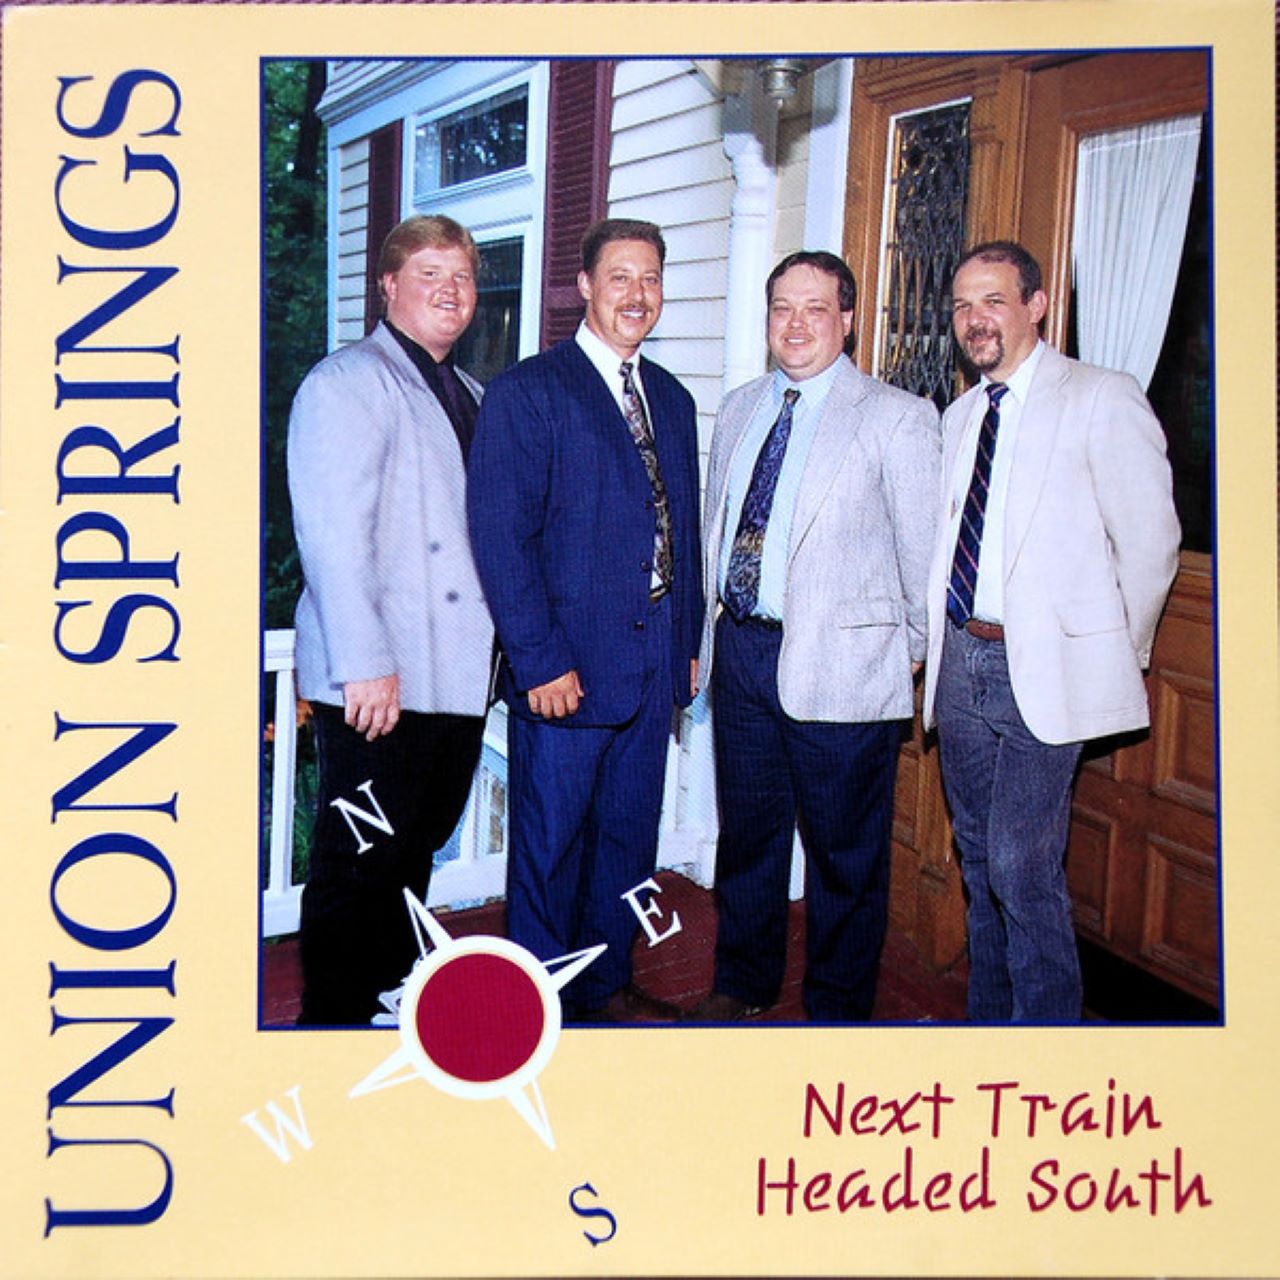 Union Springs - Next Train Headed South cover album